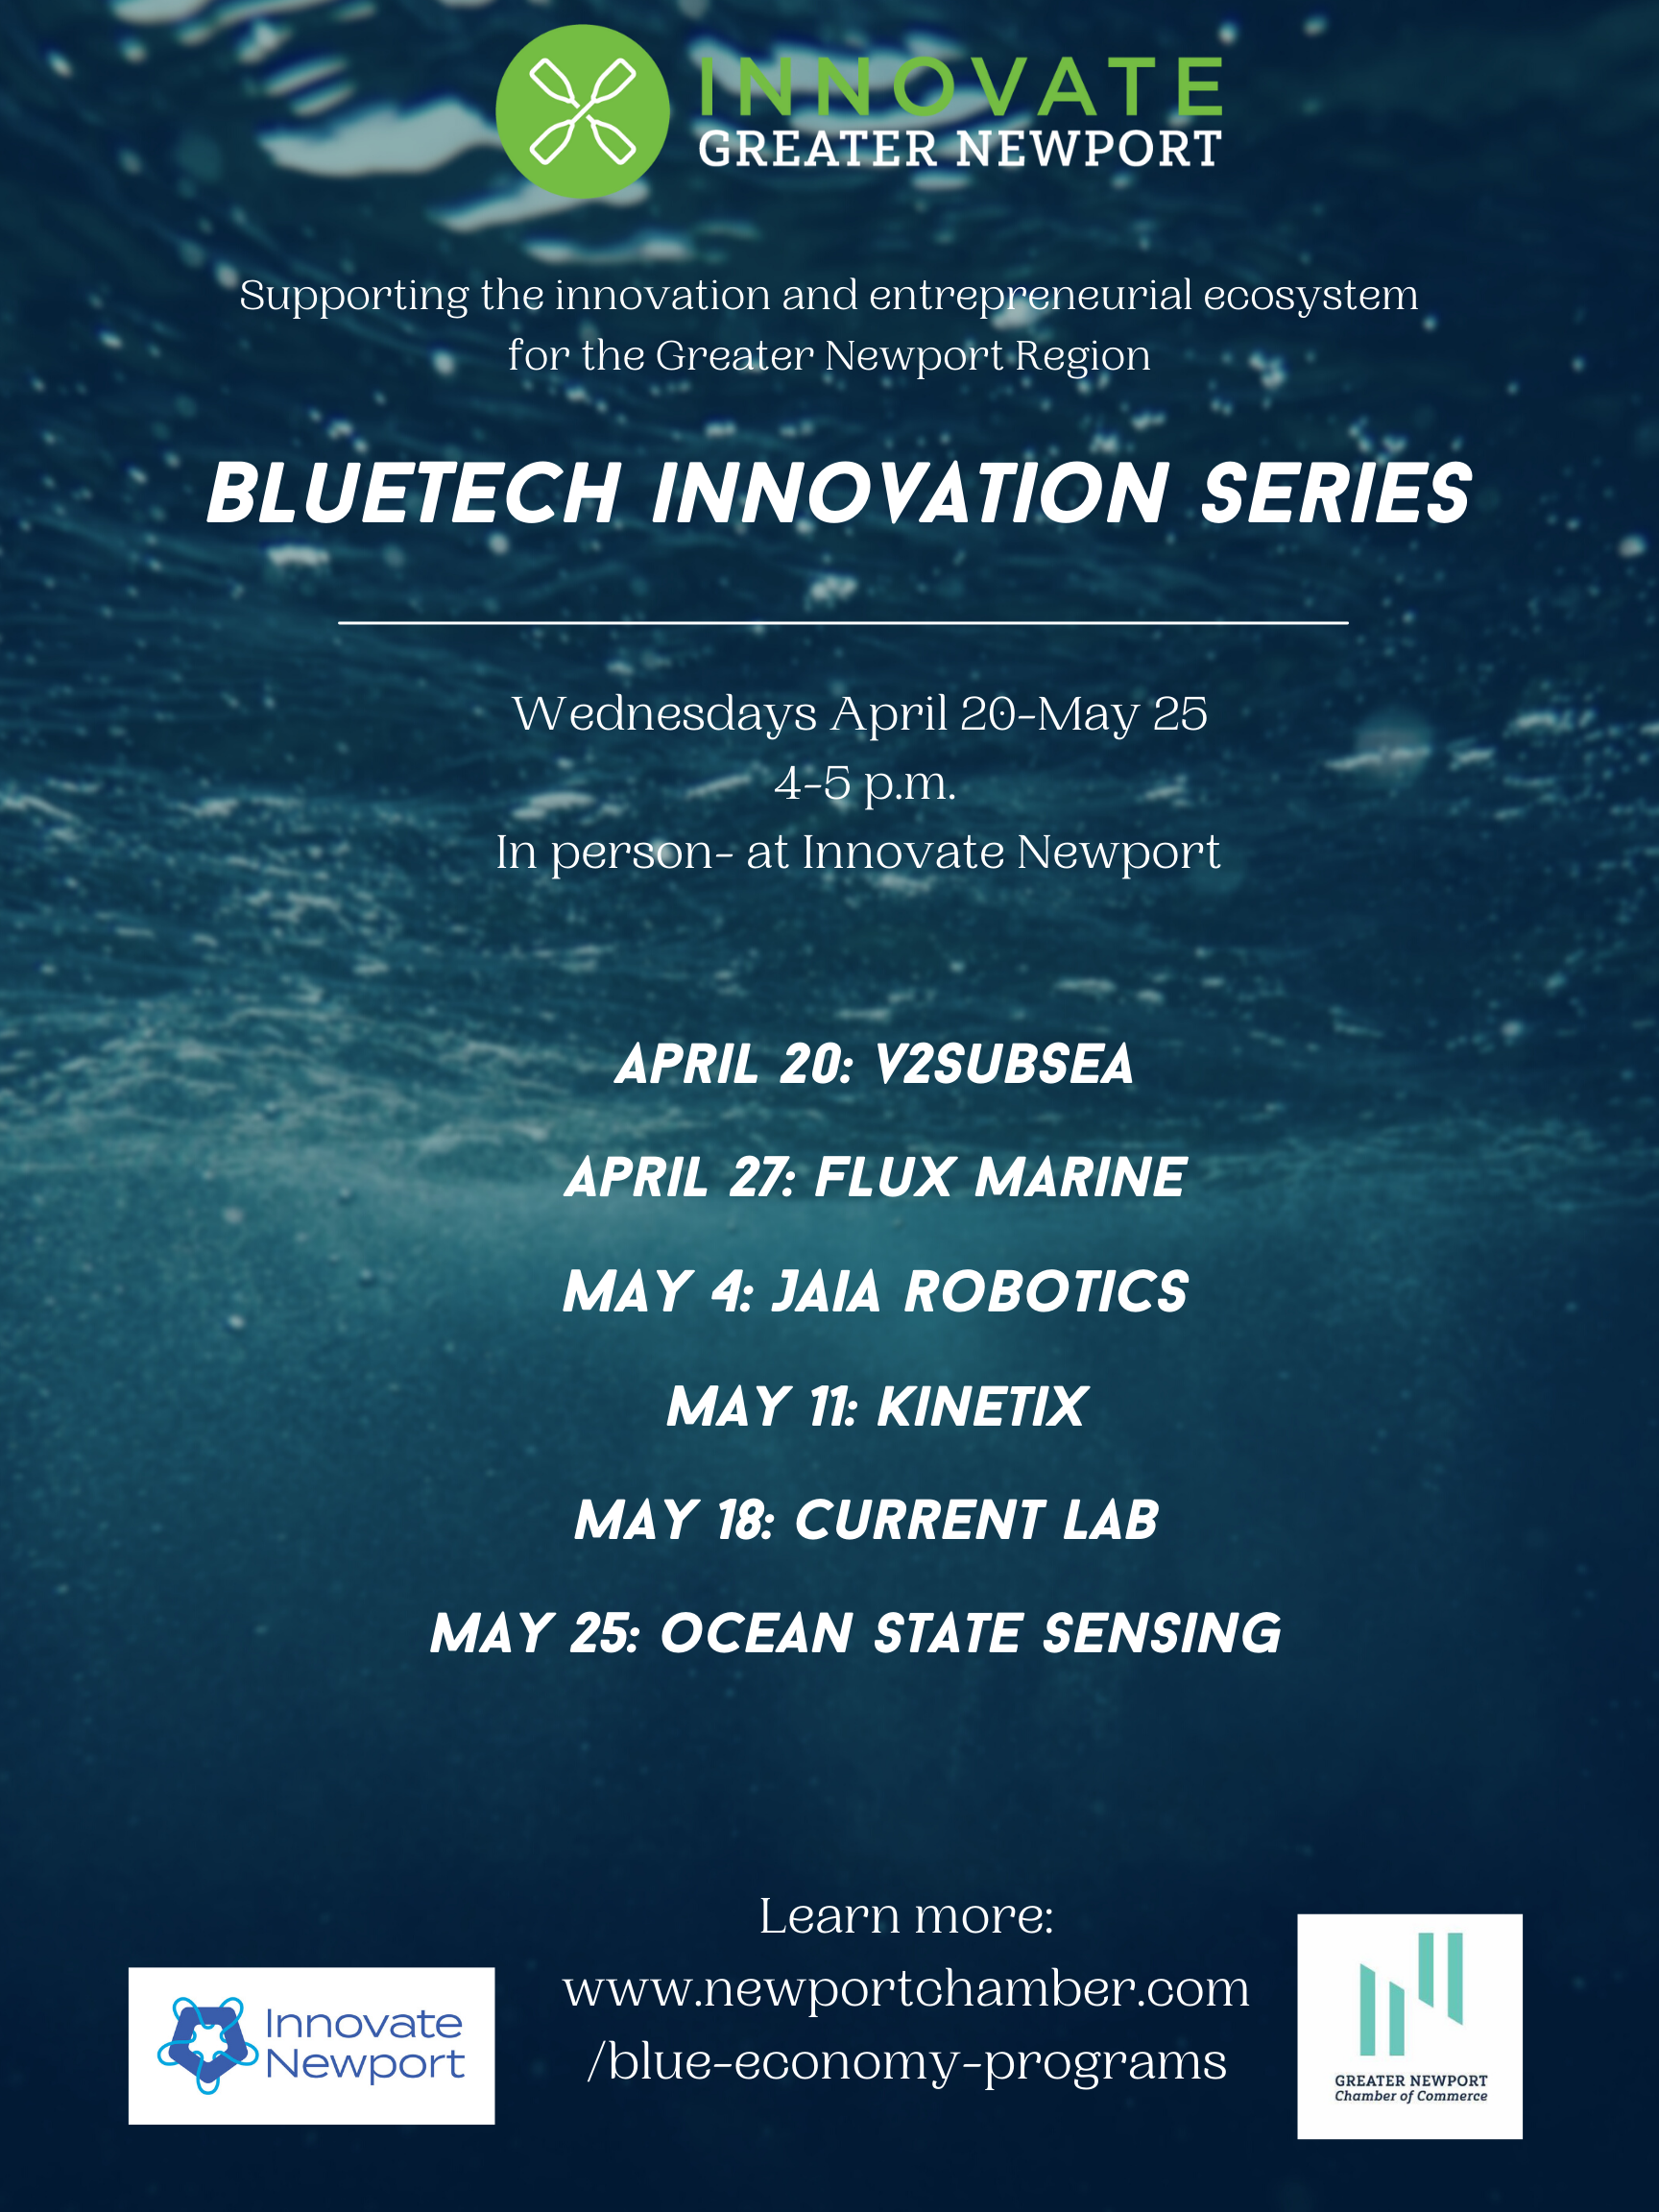 The BlueTech Innovation Series